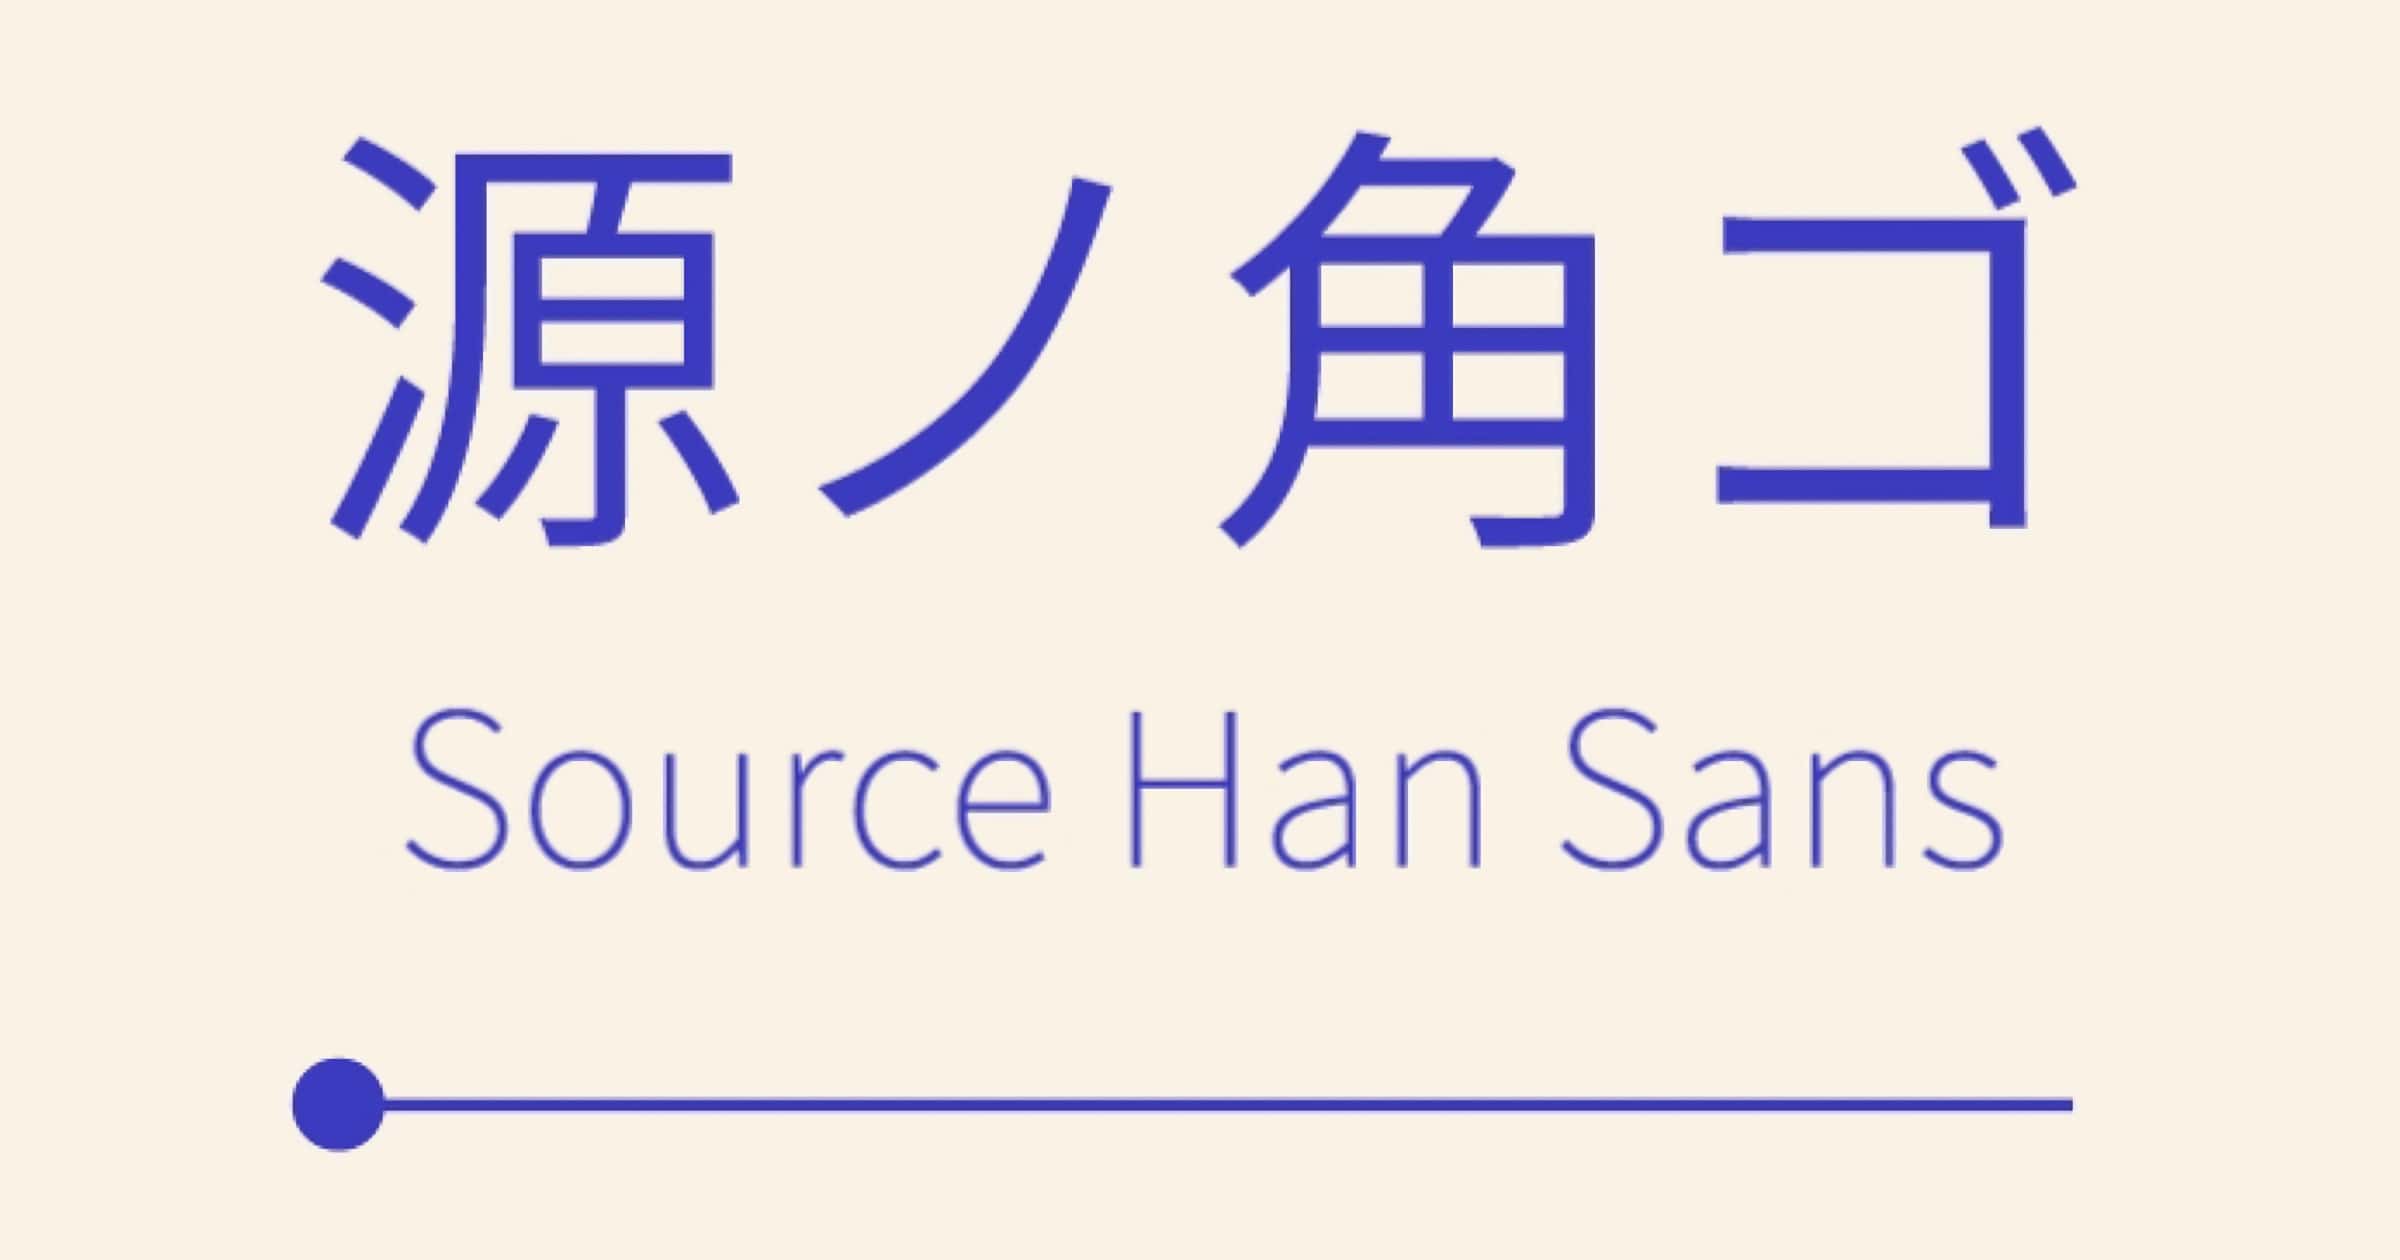 Source Han sans variable